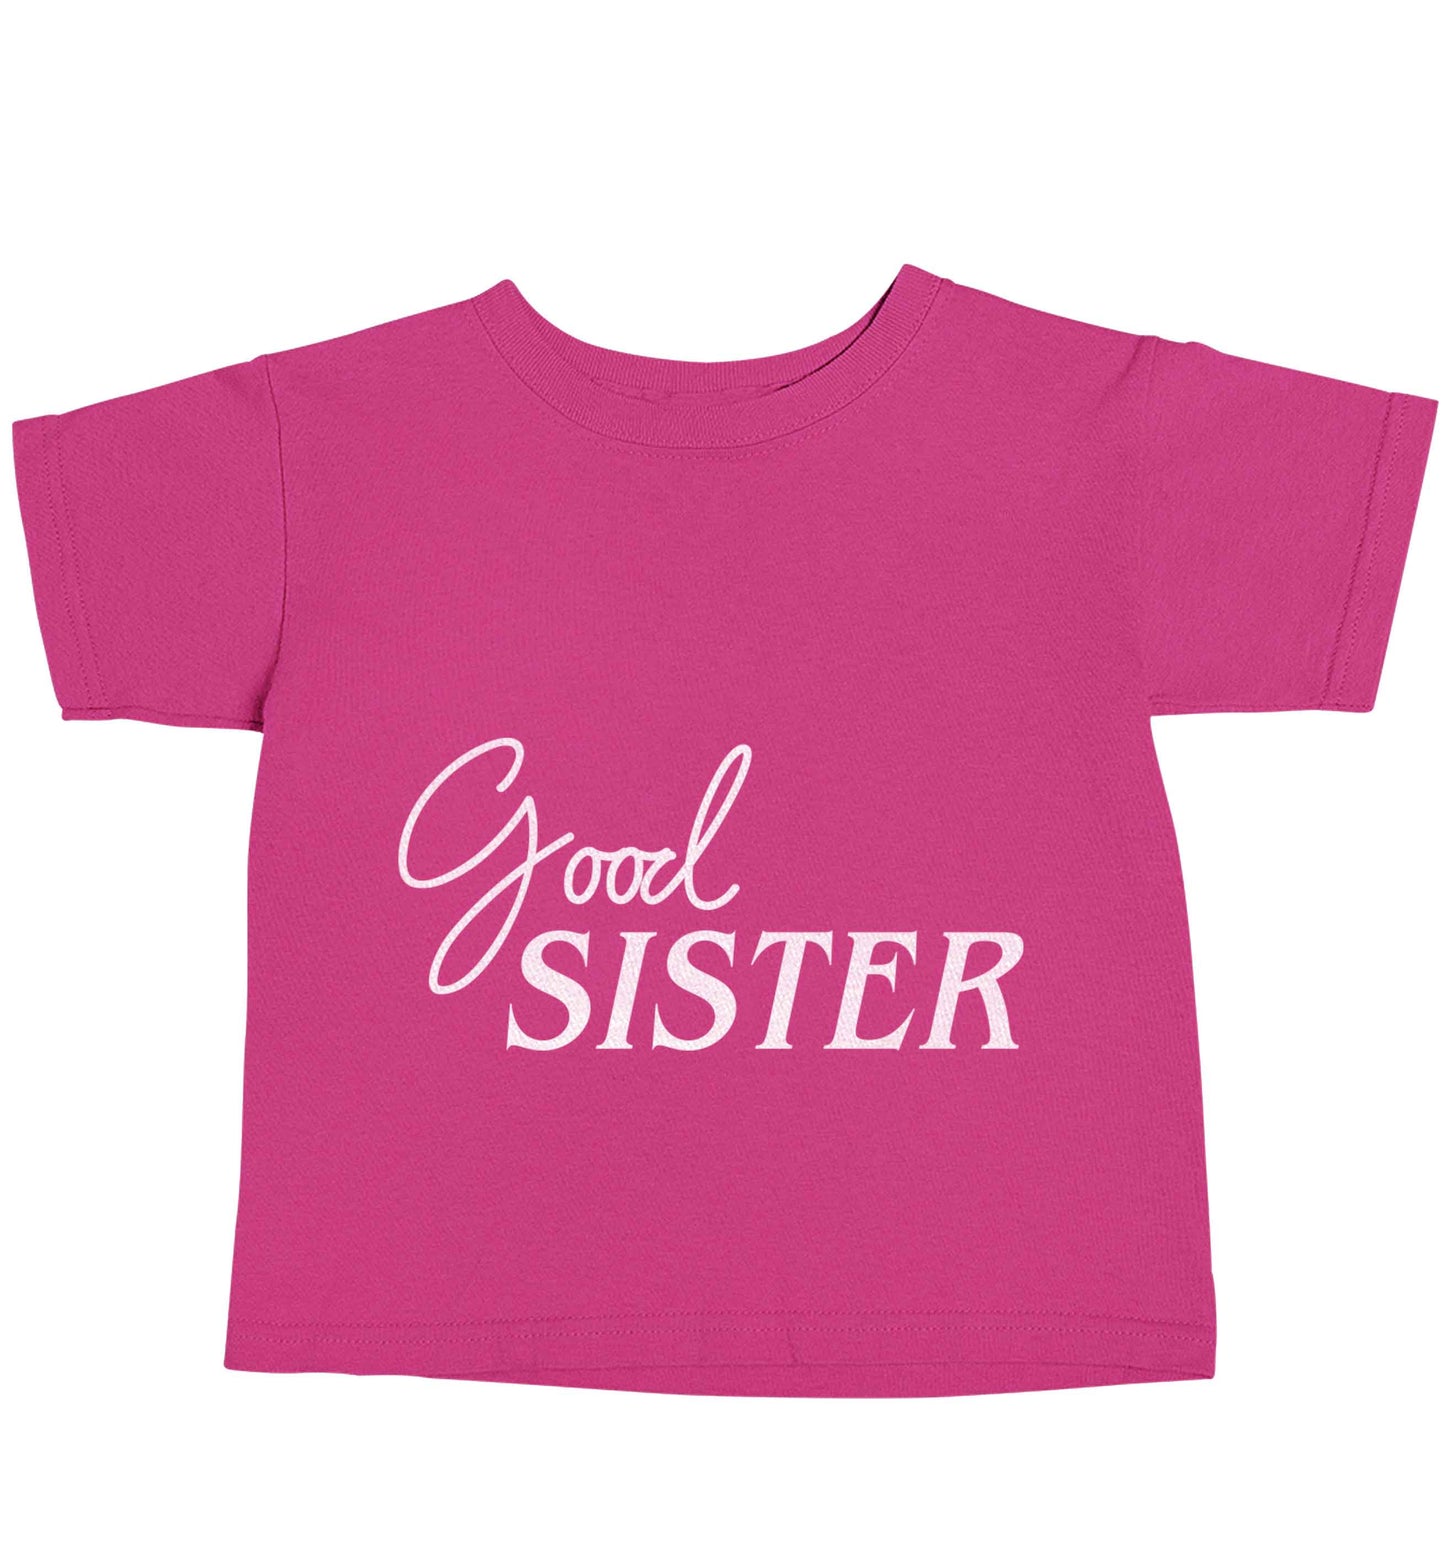 Good sister pink baby toddler Tshirt 2 Years